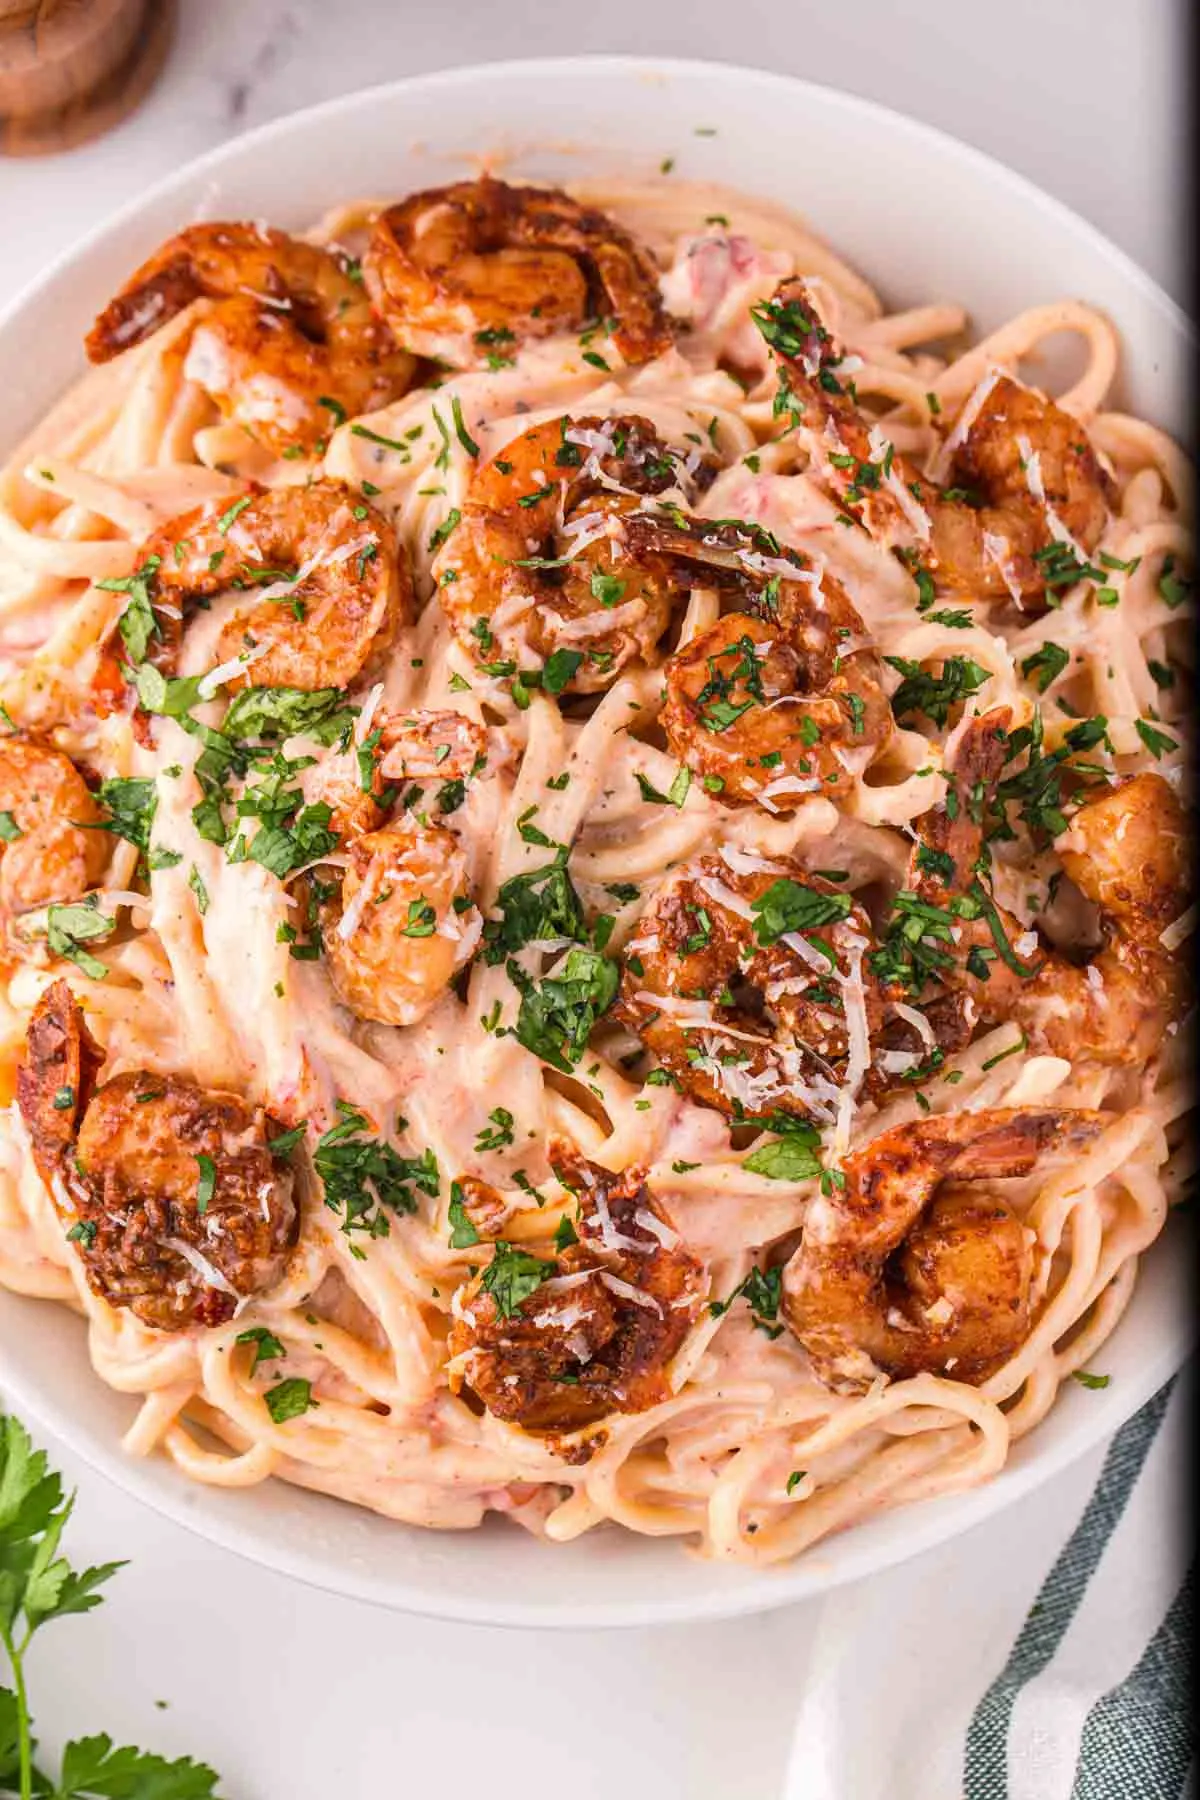 Cajun Shrimp Pasta is a delicious dinner recipe with seasoned Cajun shrimp served over linguine noodles in a flavourful creamy sauce.